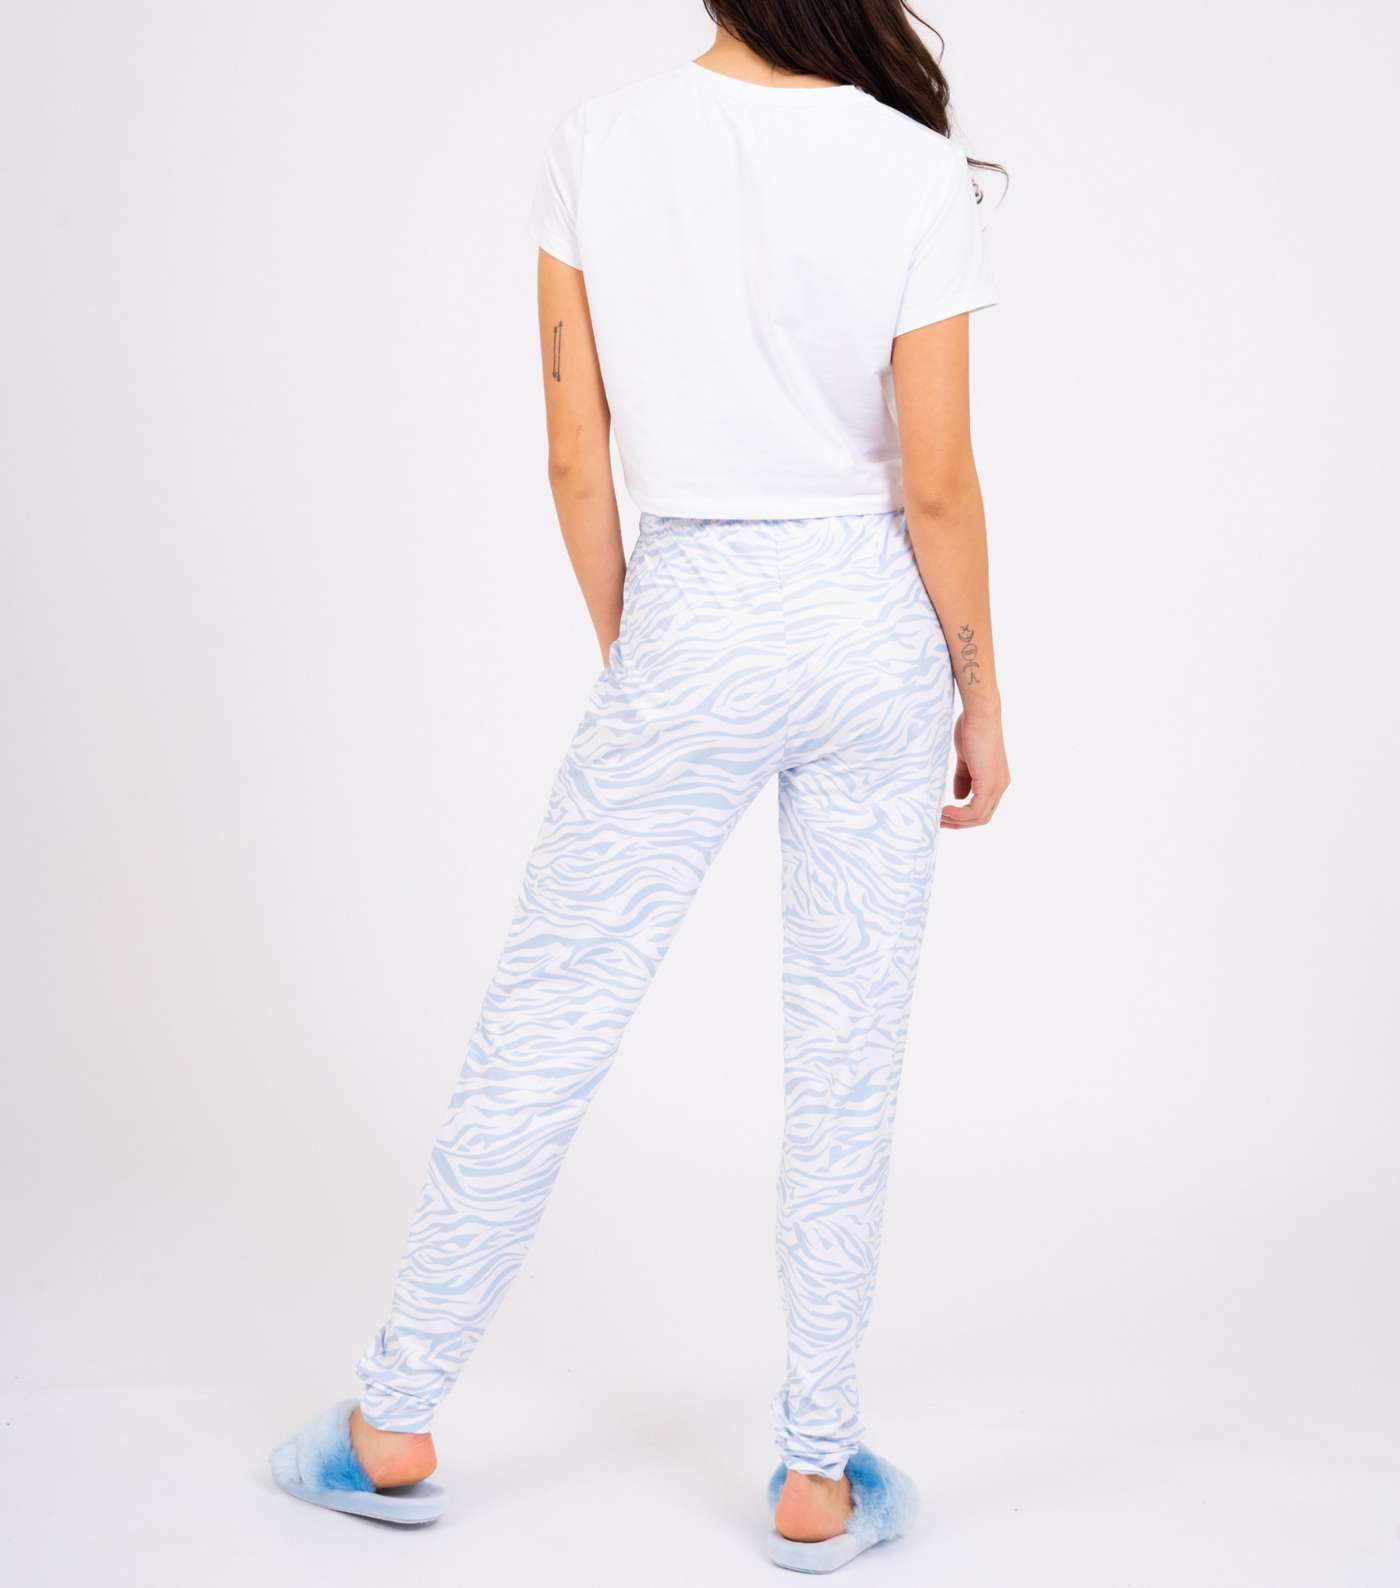 Loungeable Pale Blue Jogger Pyjama Set with Zebra Print Image 2